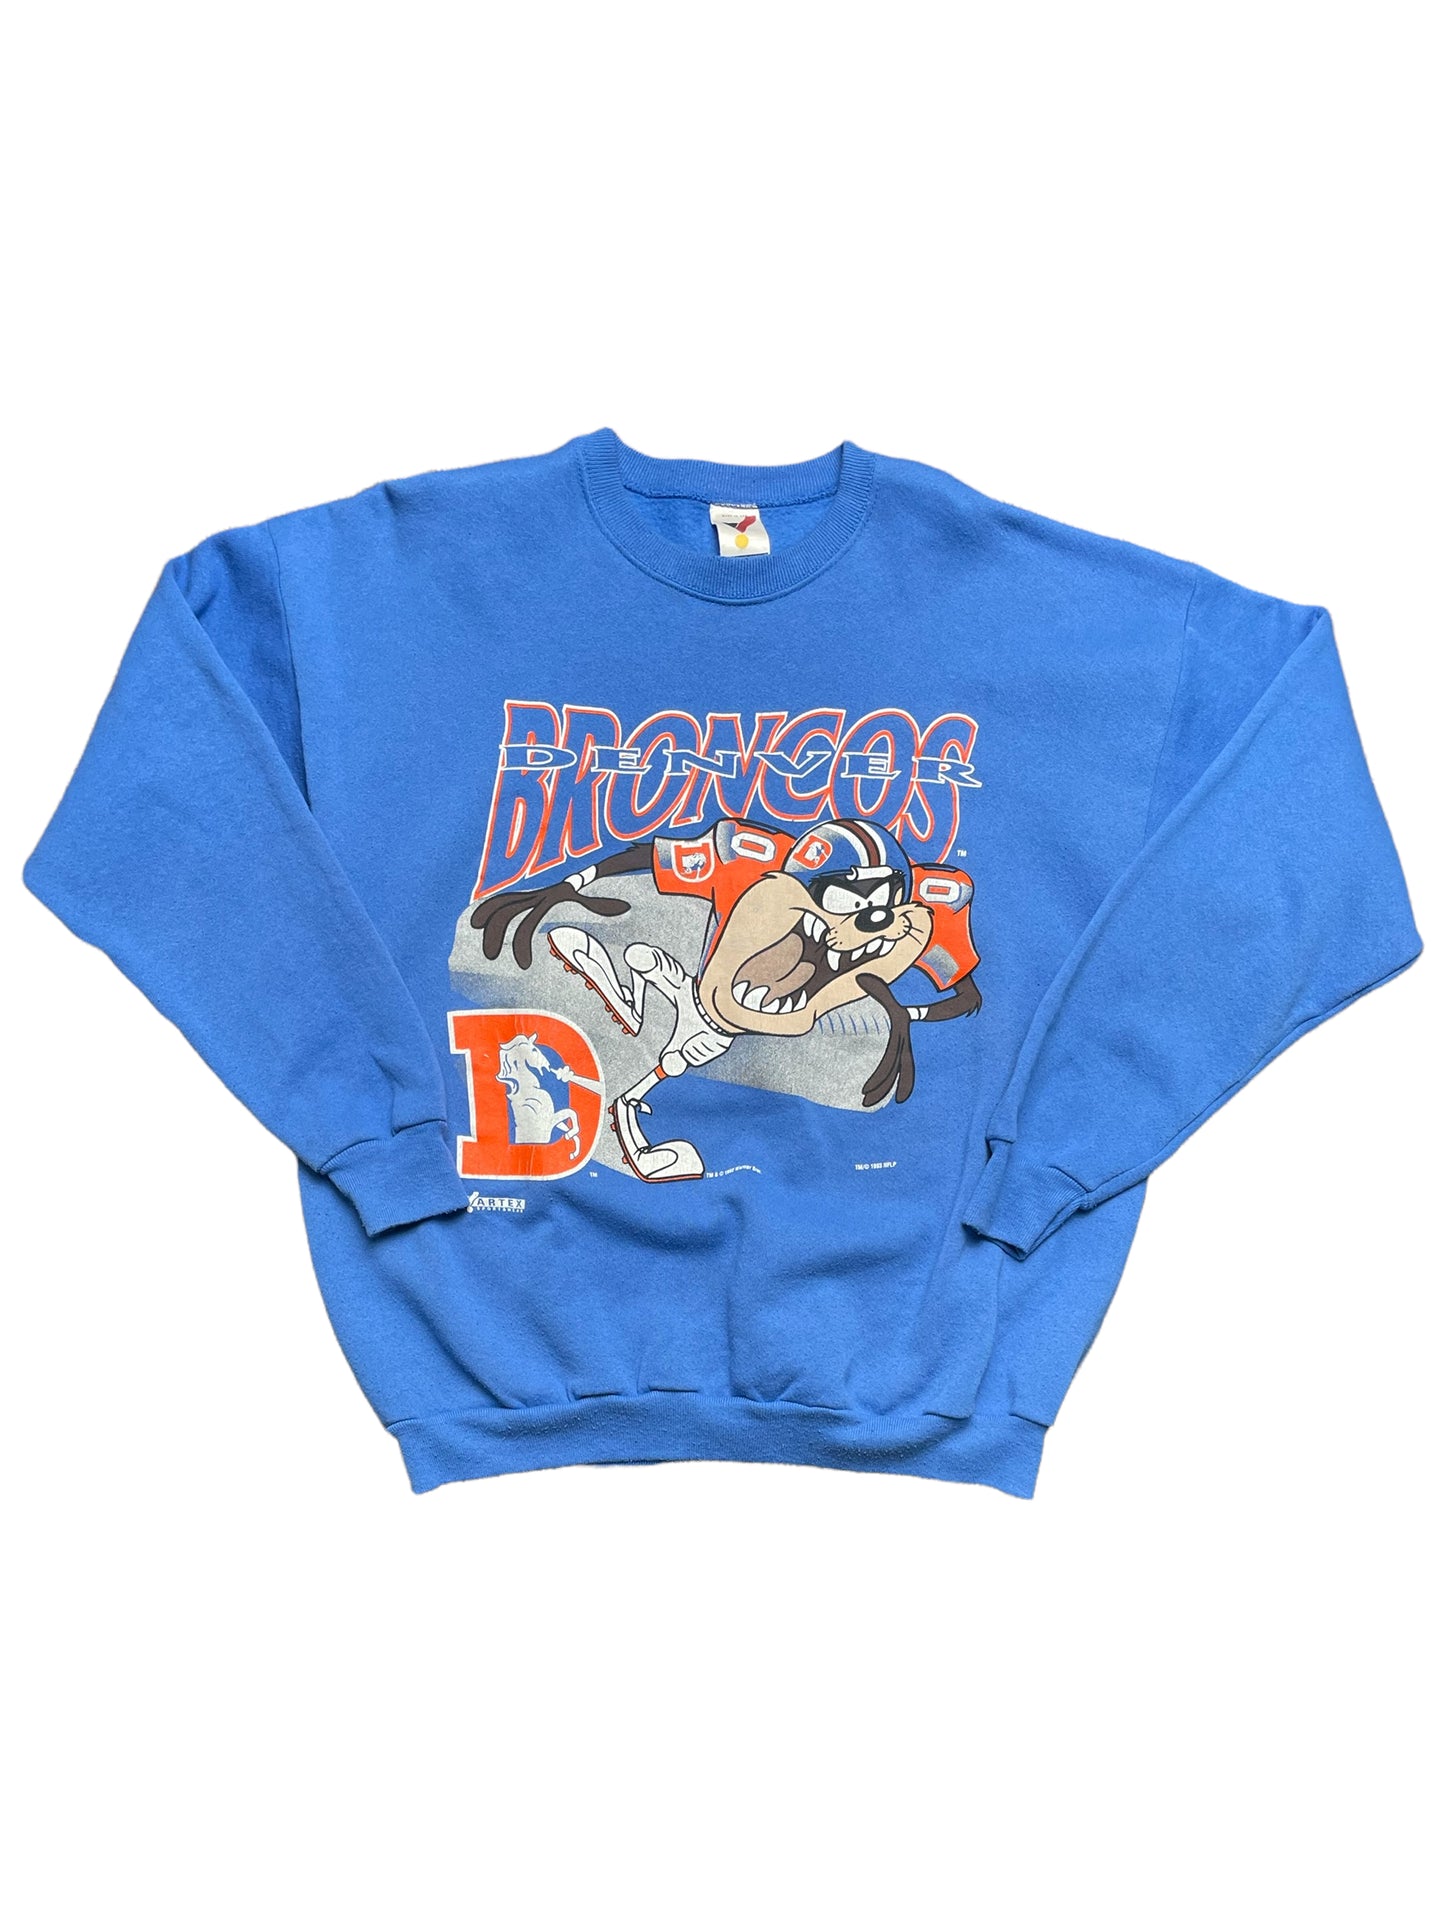 Vintage 1993 Denver Broncos Tasmanian Devil Looney Tunes NFL Sweatshirt XLarge